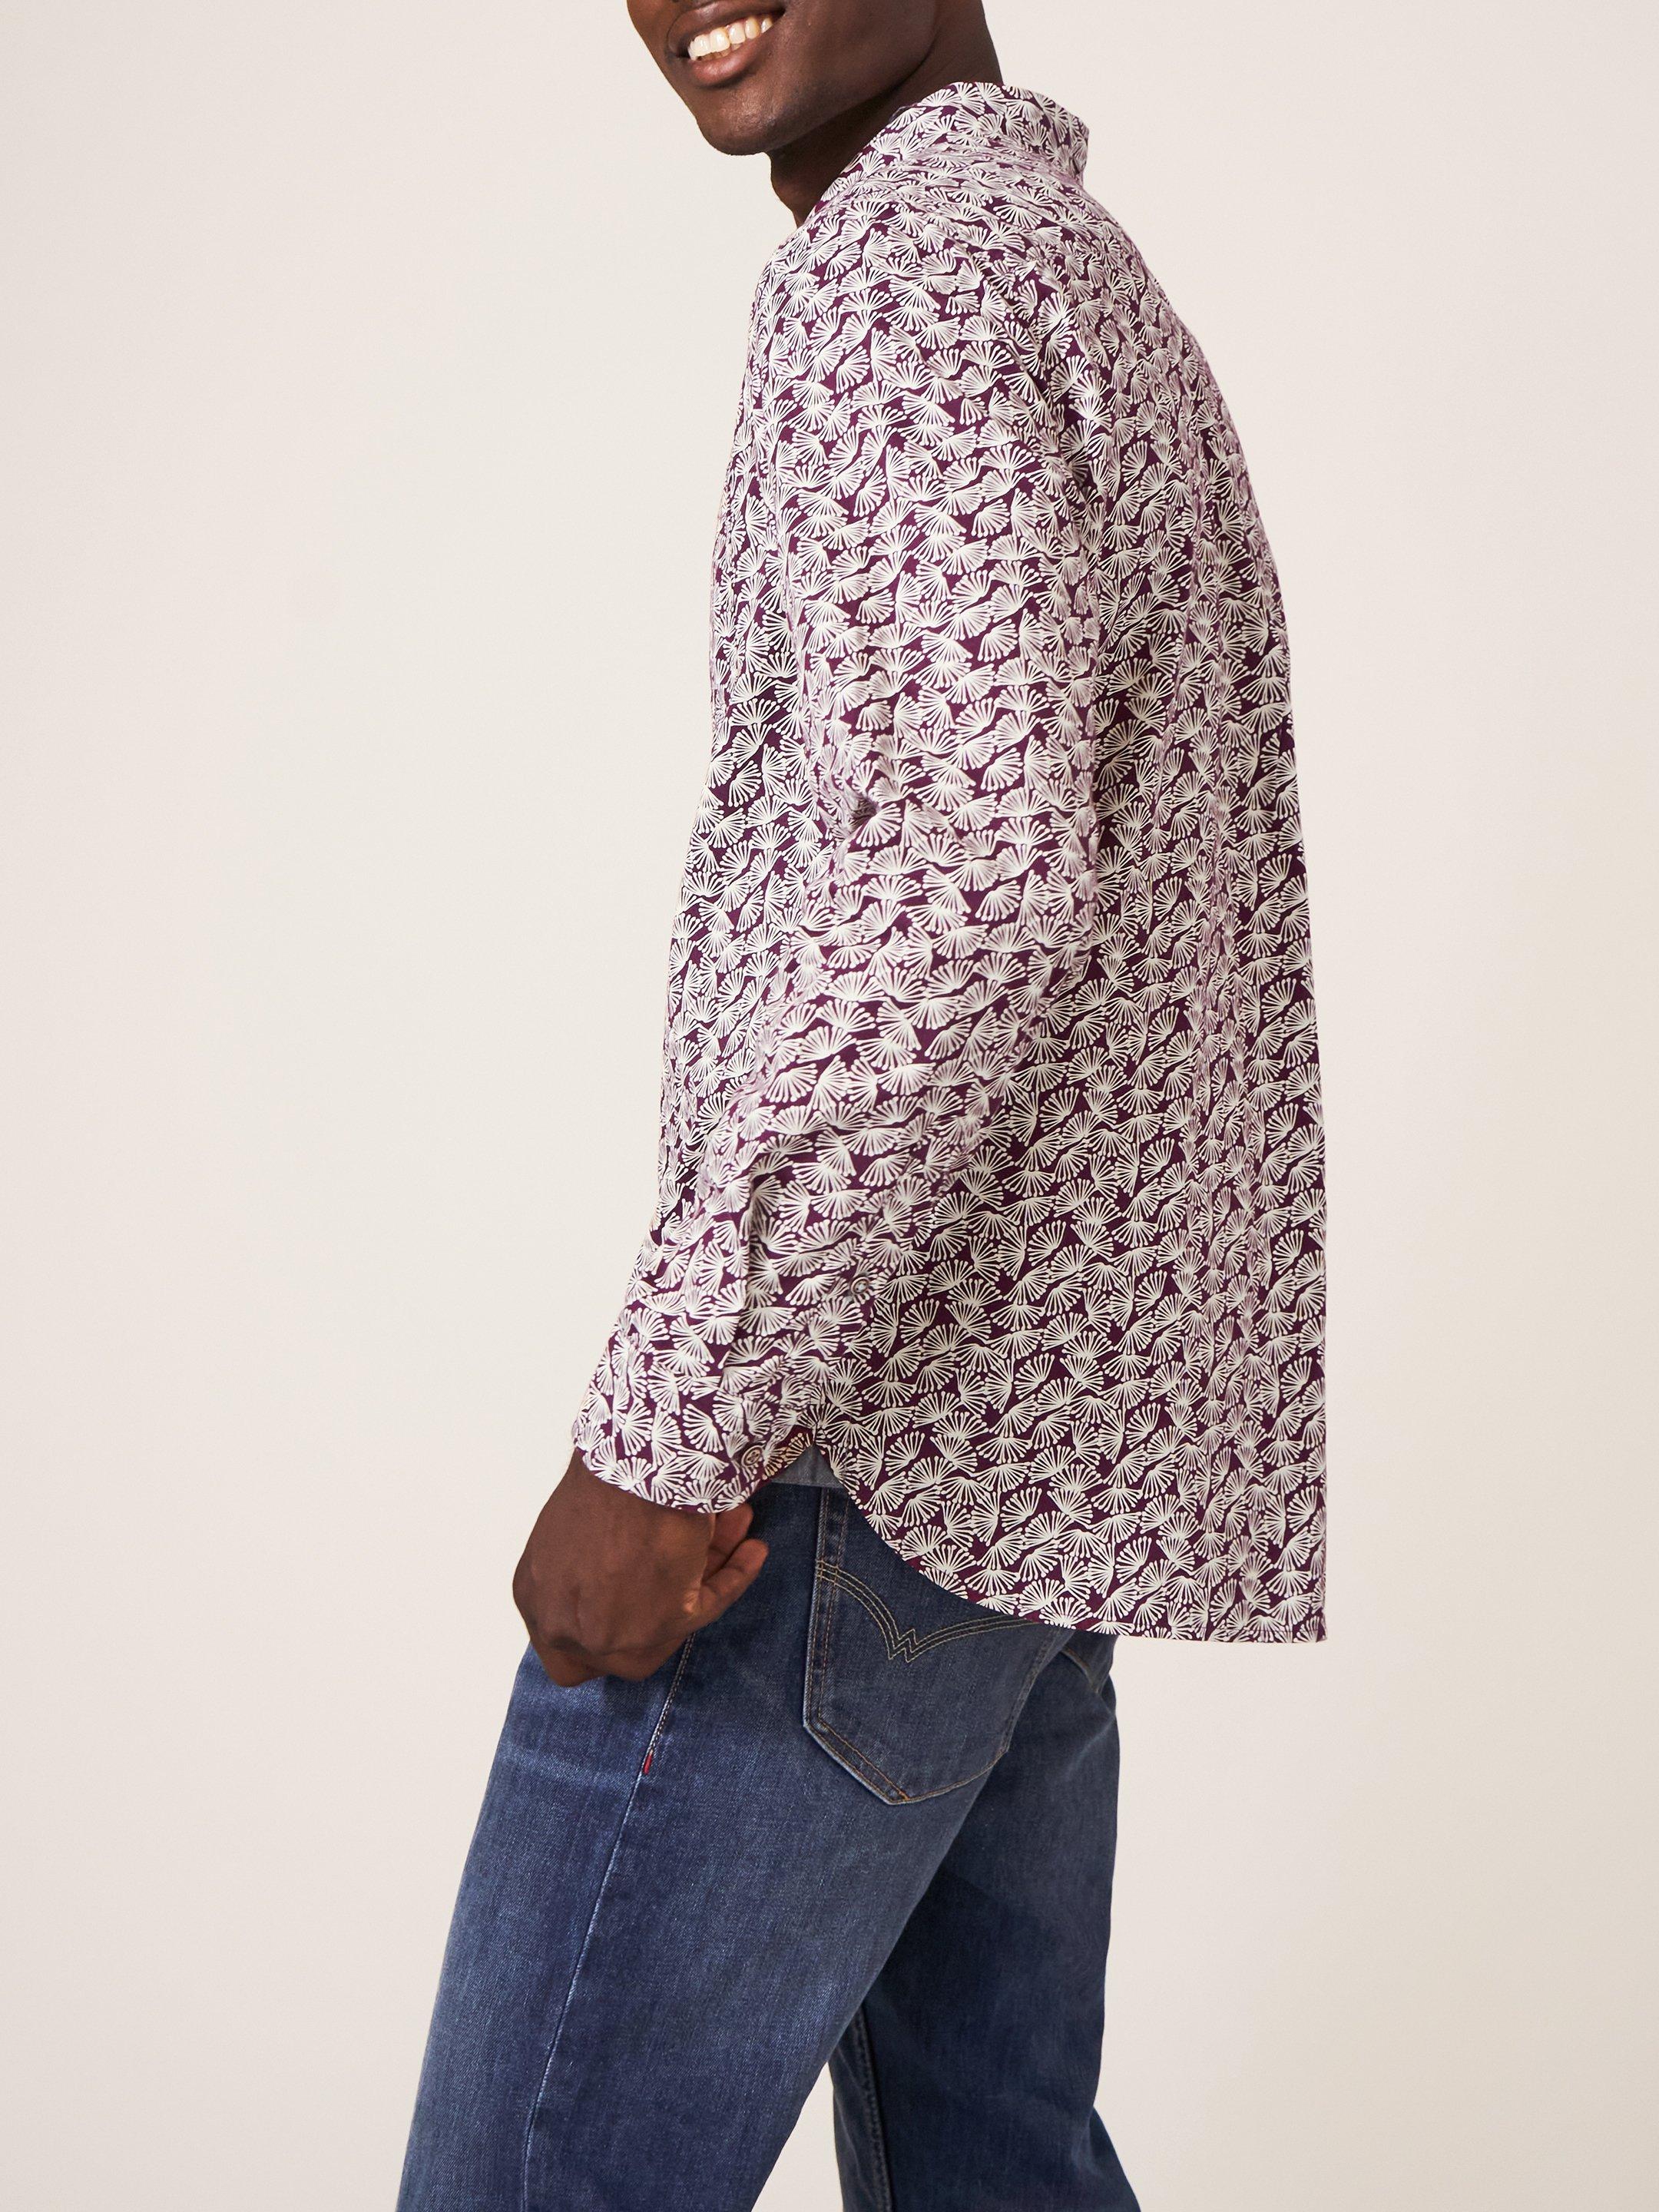 Dandelion Printed Shirt in DK PLUM - MODEL BACK